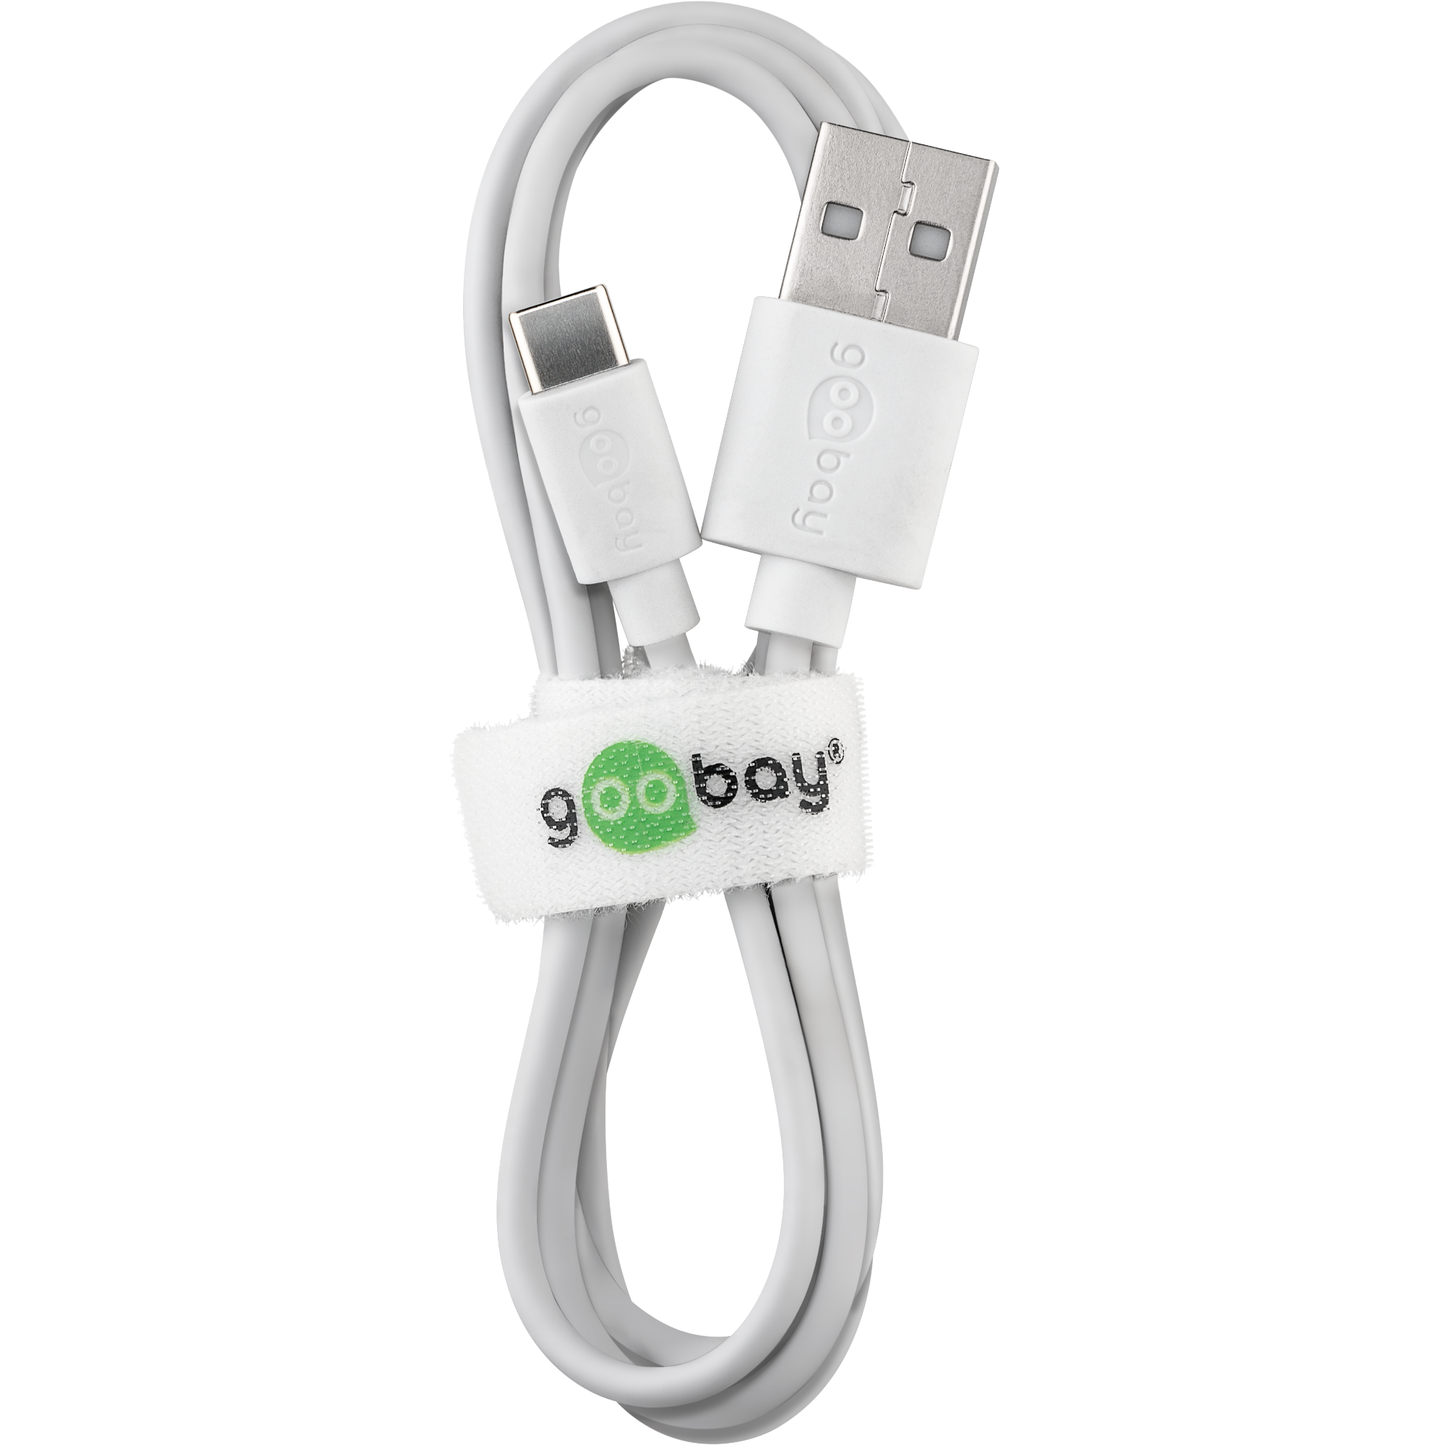 USB-C auf USB 2.0 Kabel